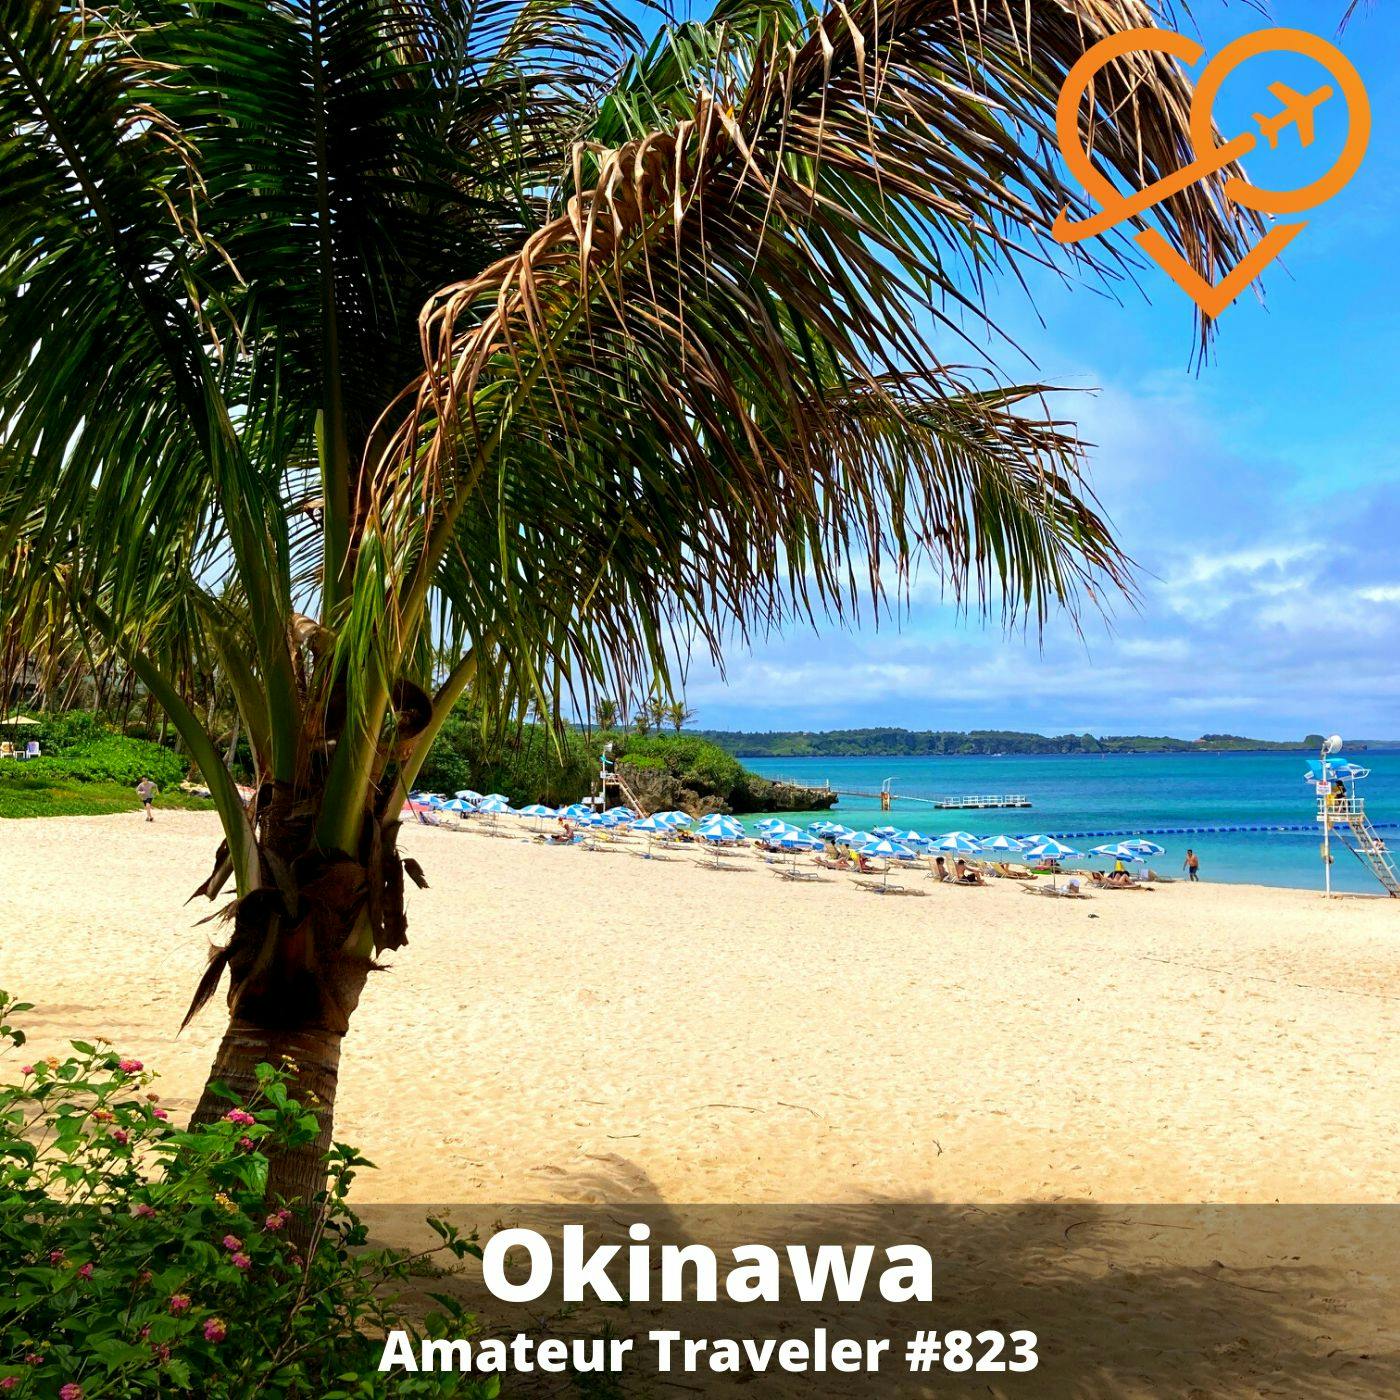 AT#823 - Travel to Okinawa